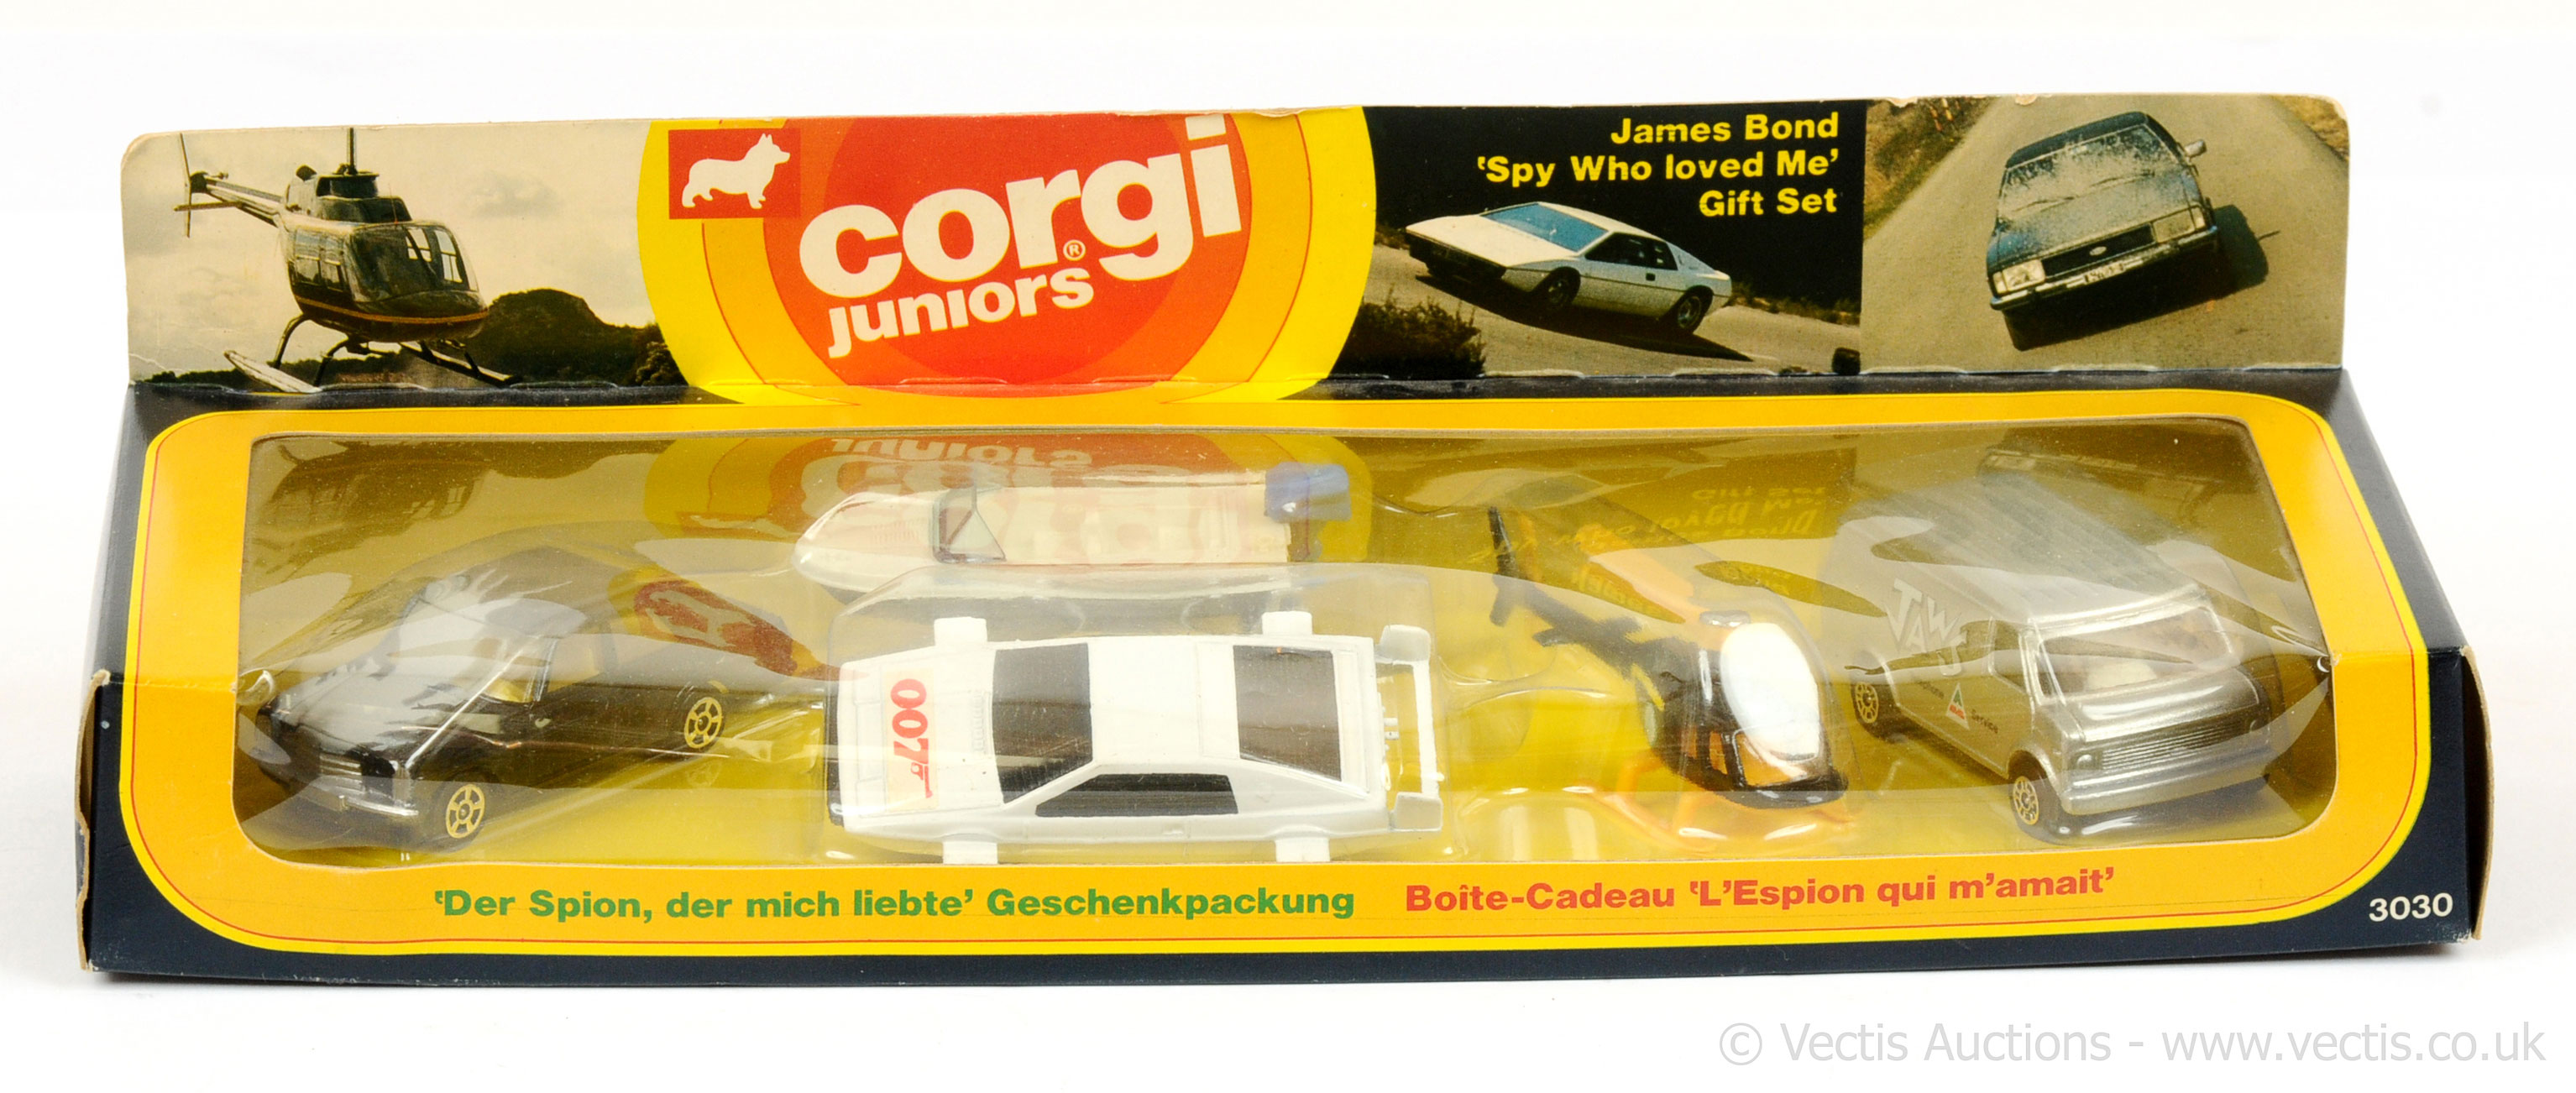 Corgi Juniors 3030 "James Bond " - Gift Set